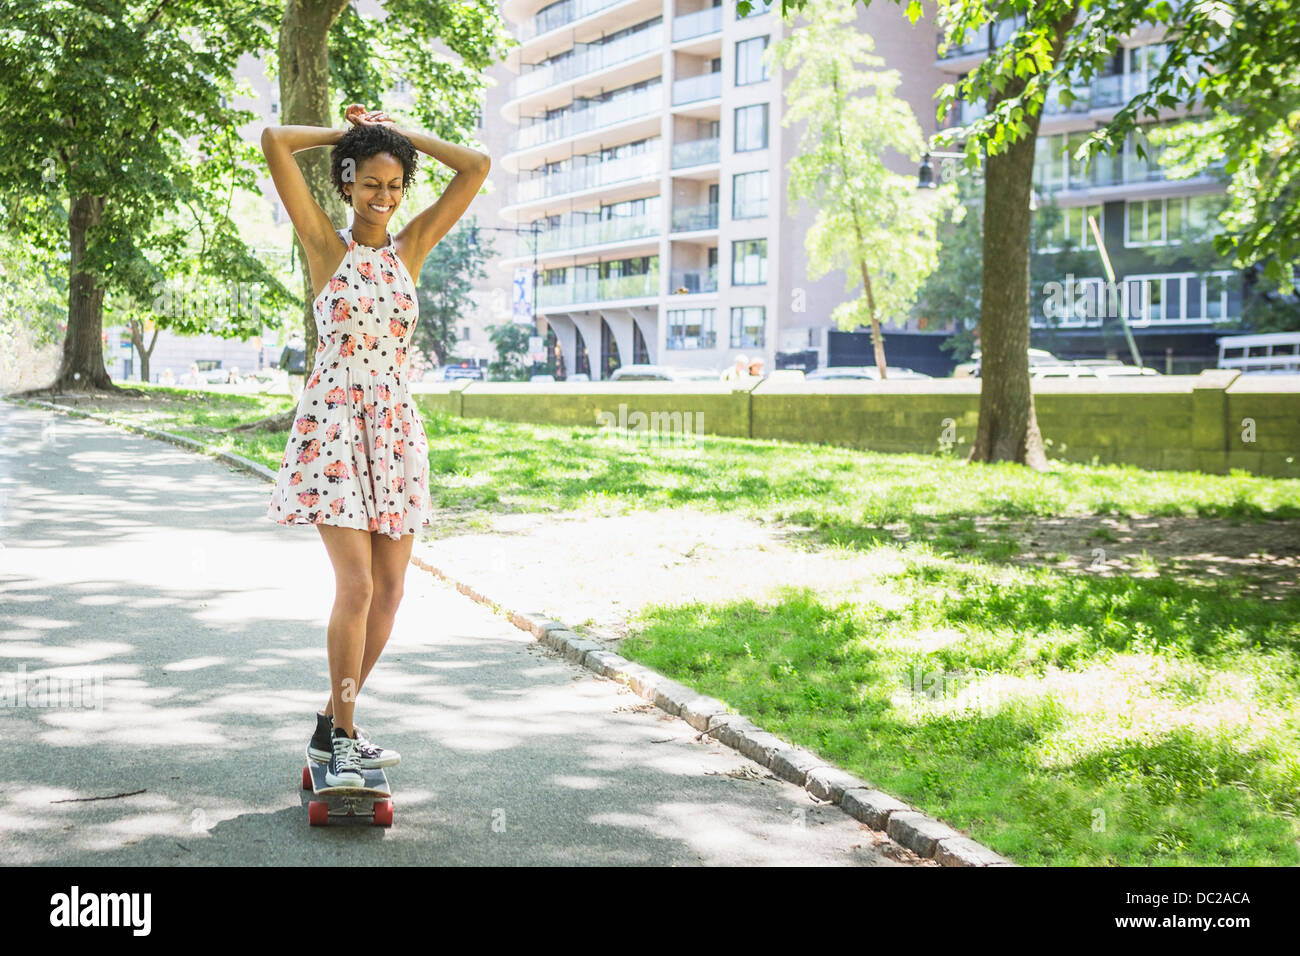 Woman skateboarding Stock Photo